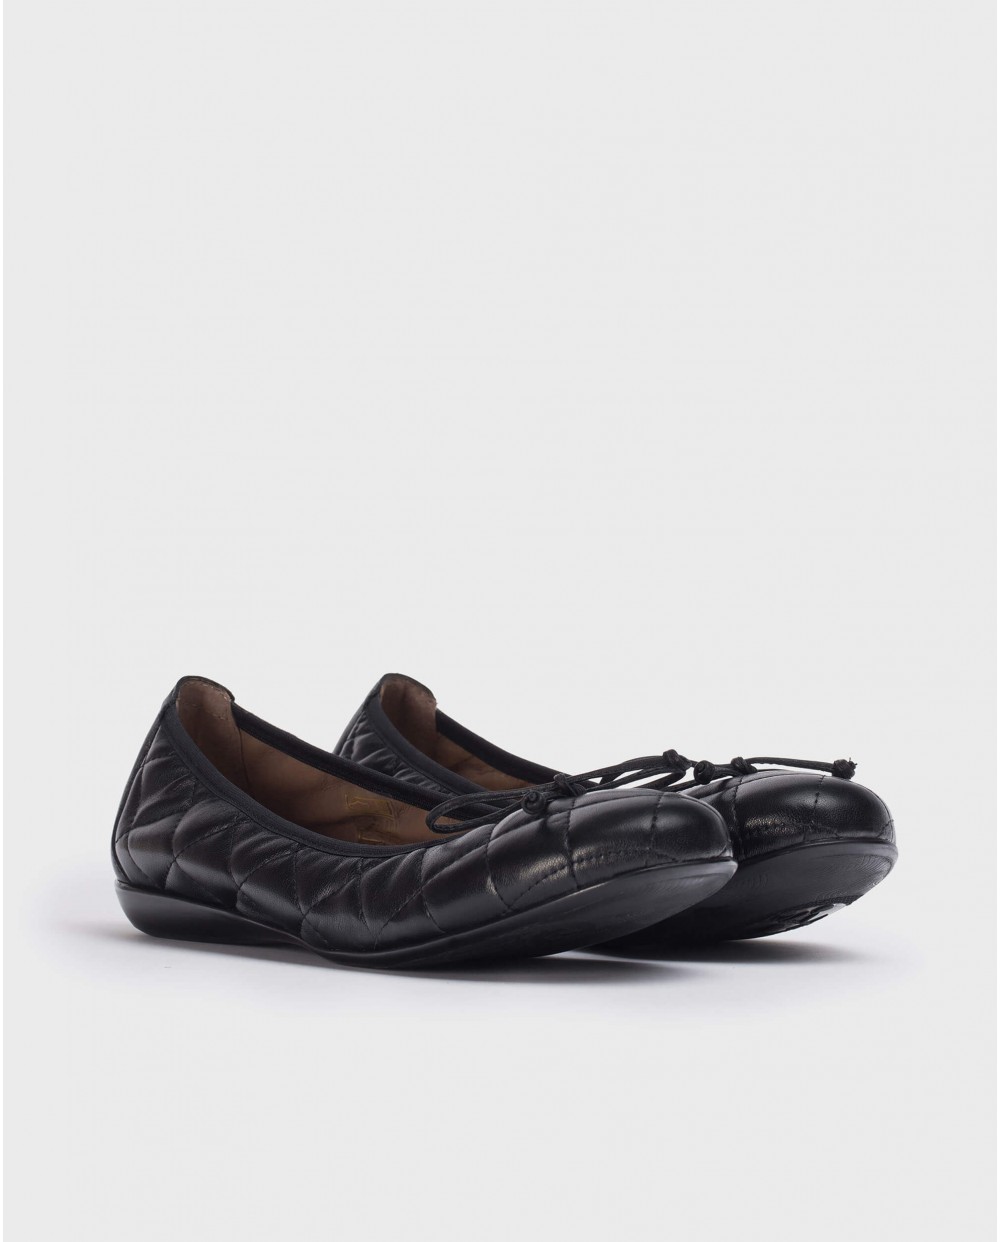 Wonders-Flat Shoes-Black Elin Ballet pump